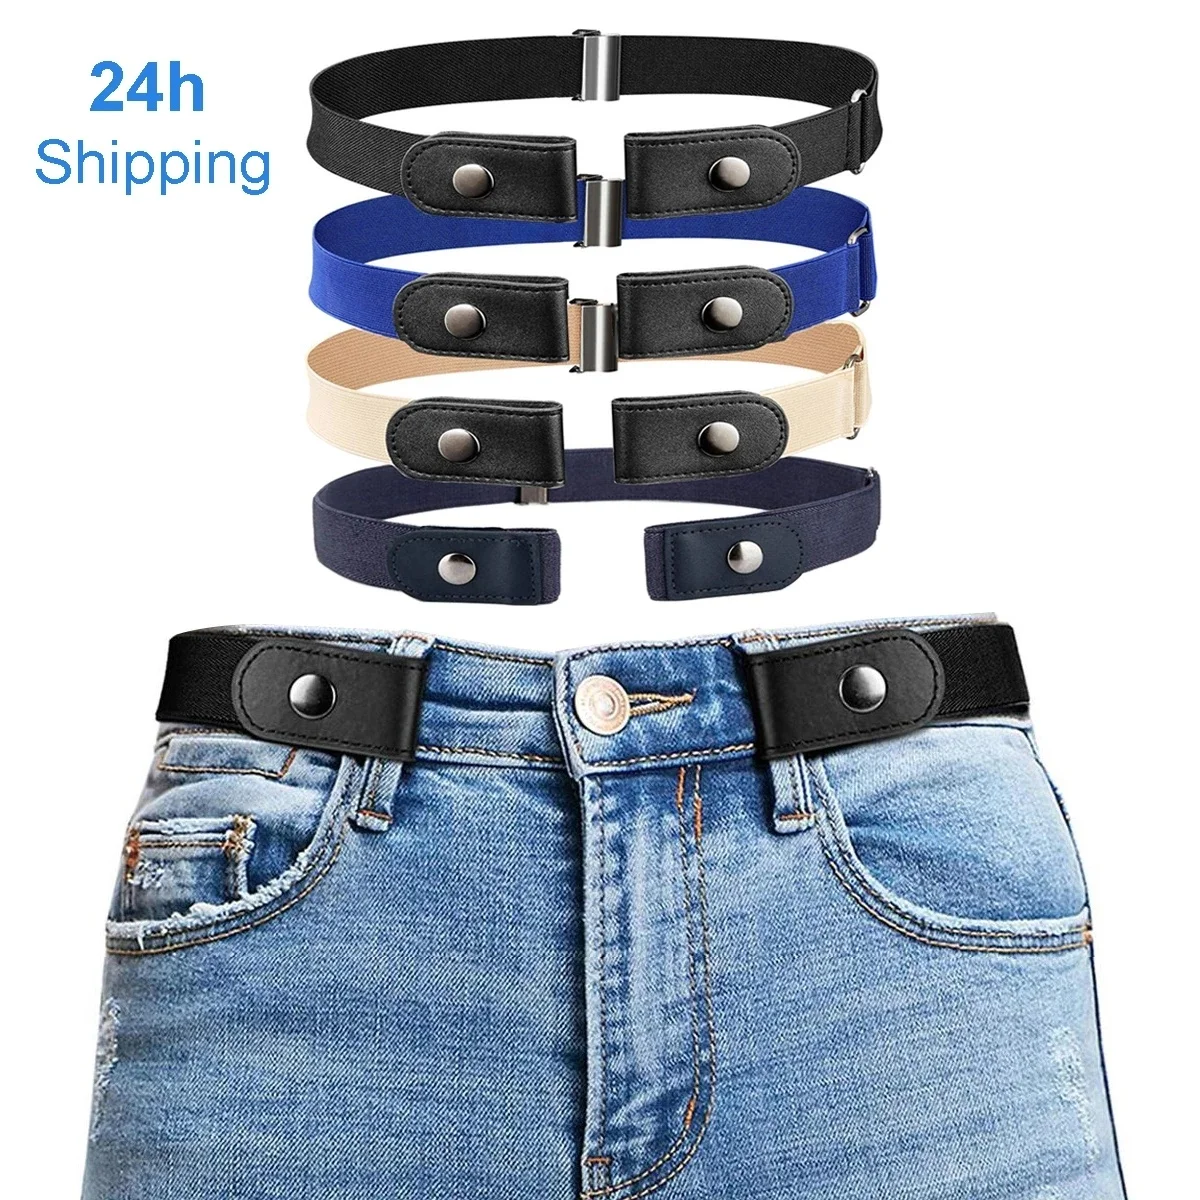 Universal 1 Inch No Buckle Stretch Elastic Waist Buckle-Fr Belts For Jean Pants Dresses Women Men Belt